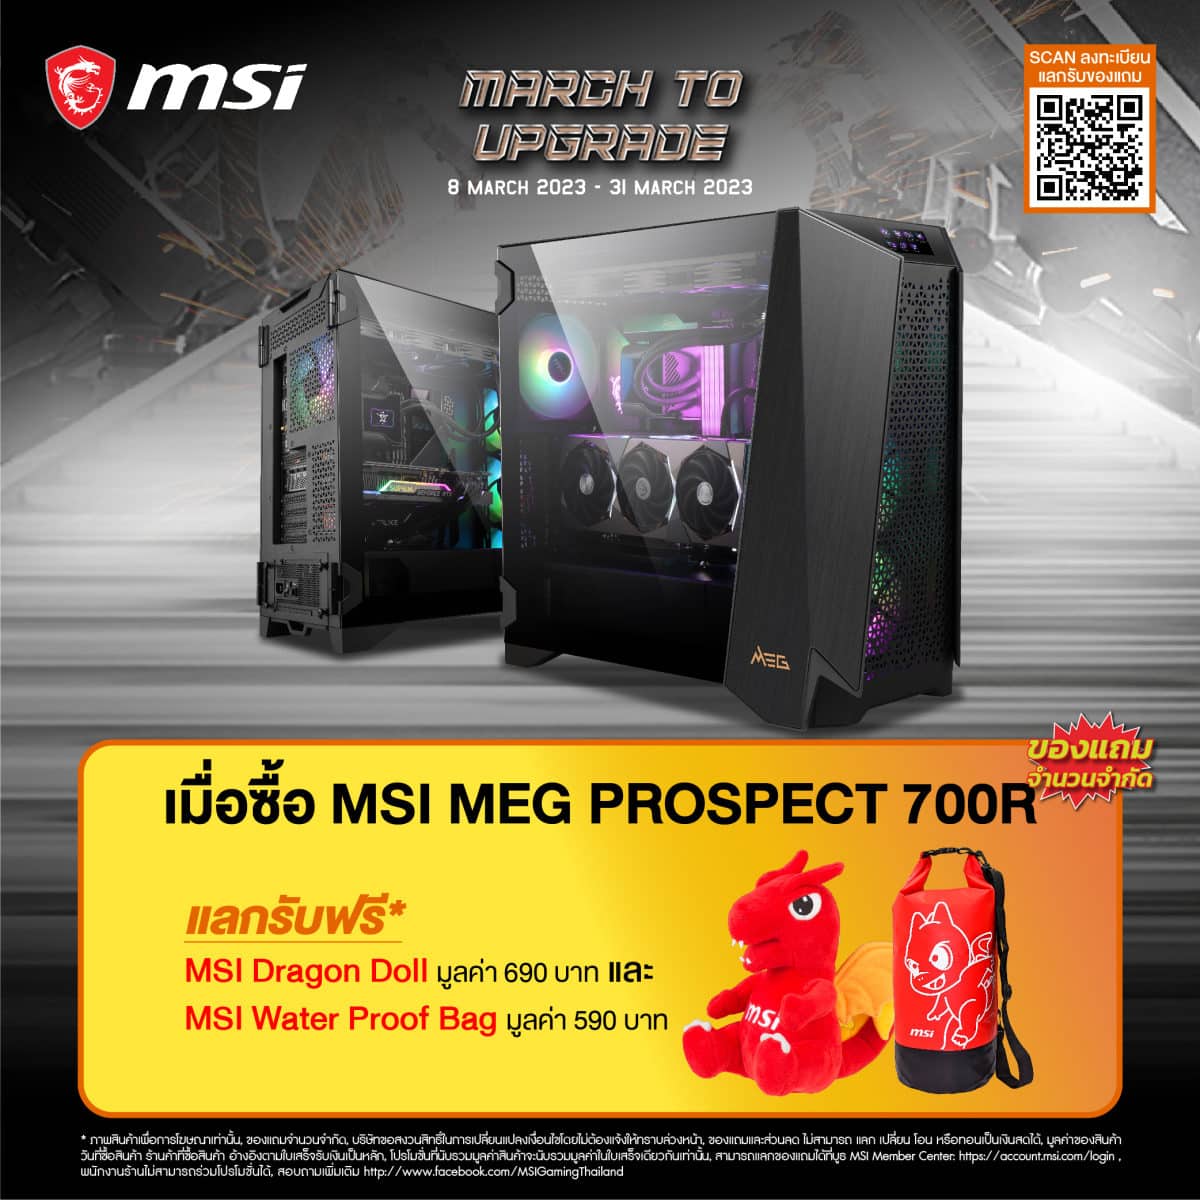 MSI MARCH UPGRADE โปรโมชัน MSI MEG PROSPECT 700R